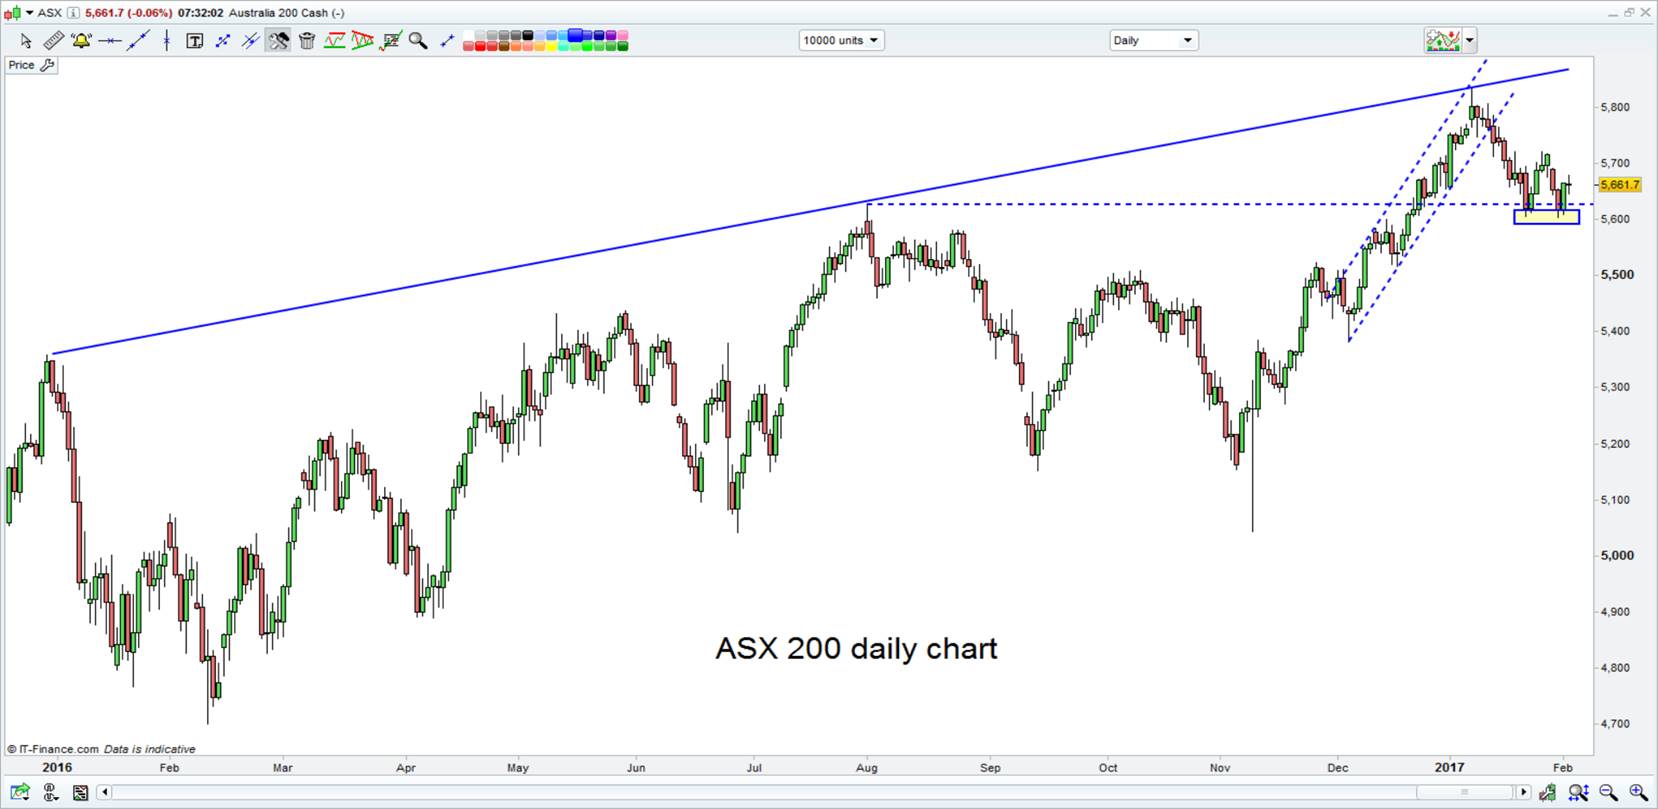 ASX Daily Price Chart